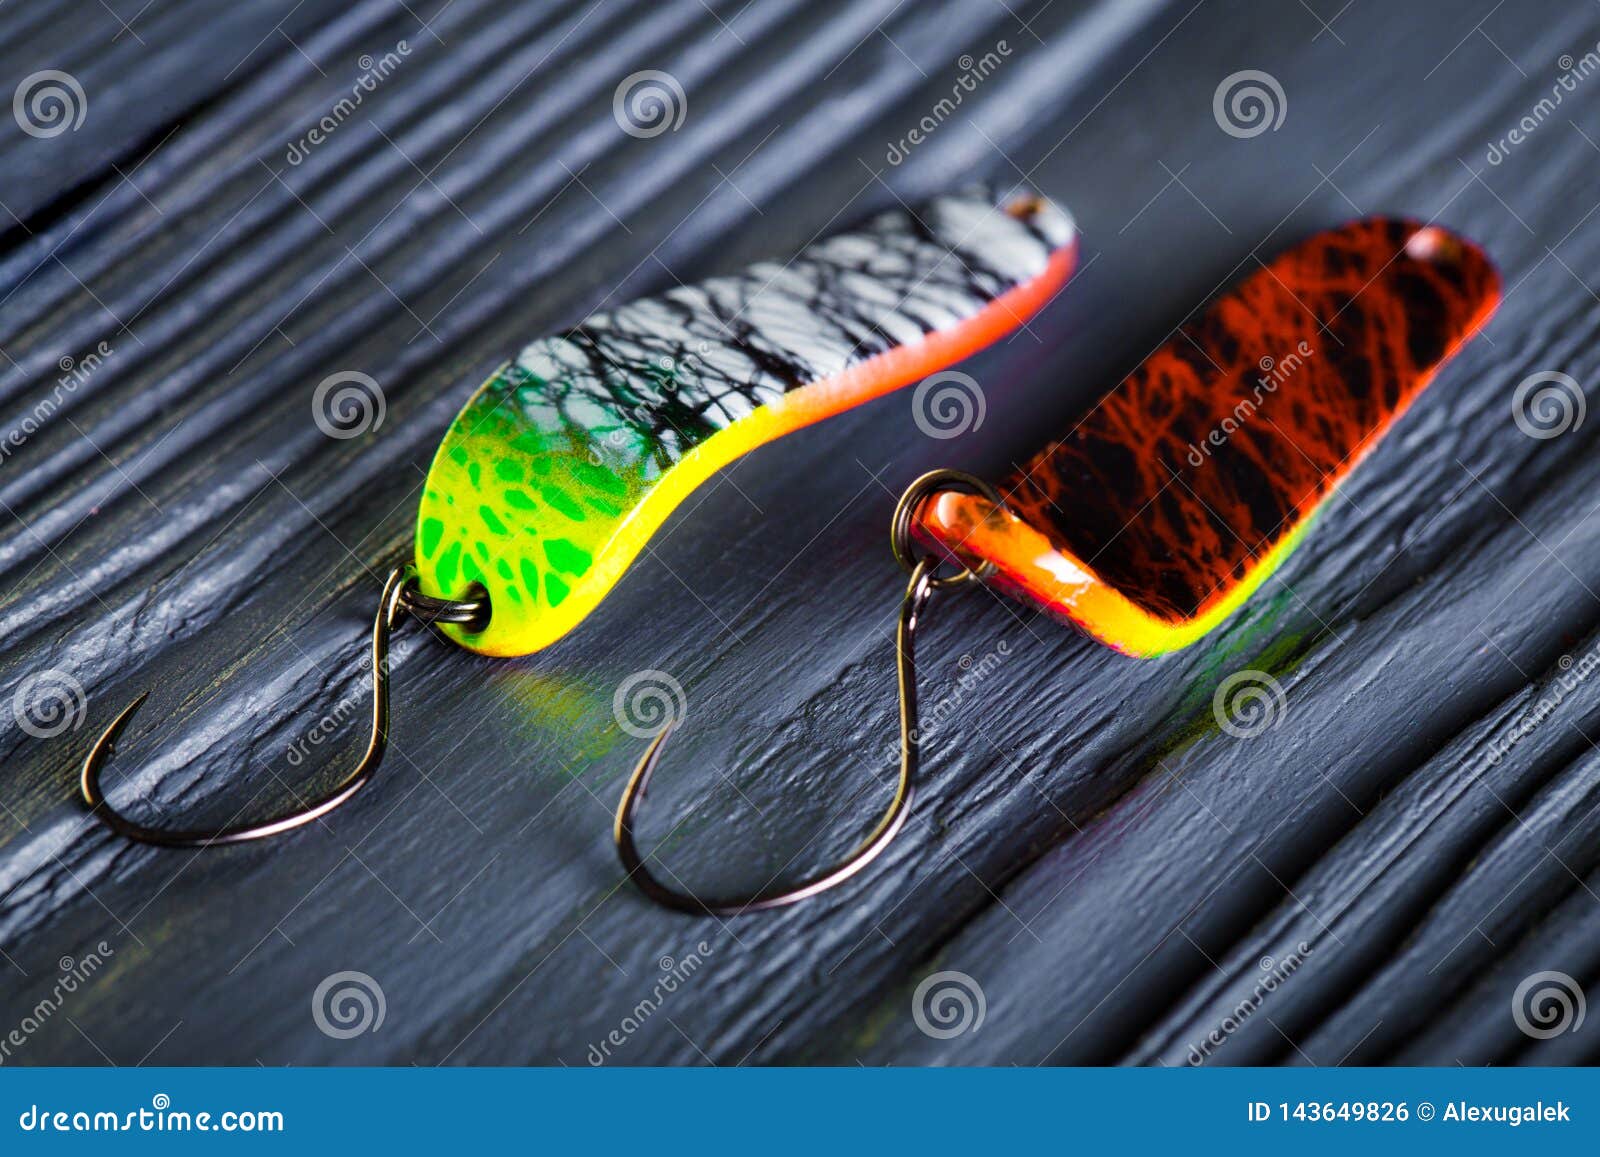 https://thumbs.dreamstime.com/z/asp-fish-lures-steel-spoon-baits-black-wooden-table-closeup-fishing-143649826.jpg